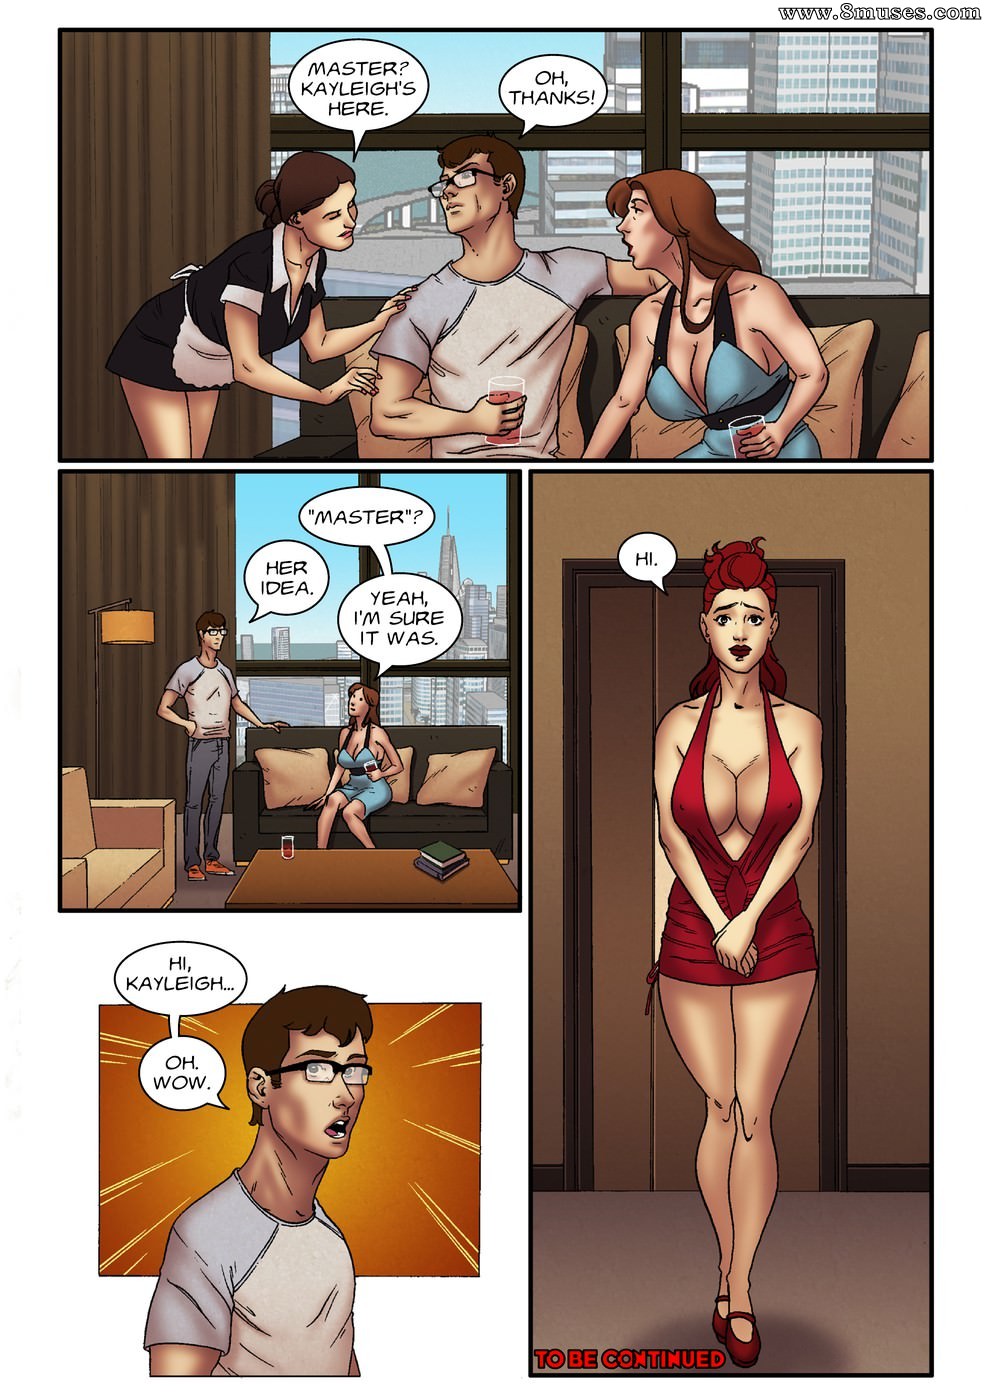 Hidden Knowledge Issue 17 - 8muses Comics - Sex Comics and Porn Cartoons